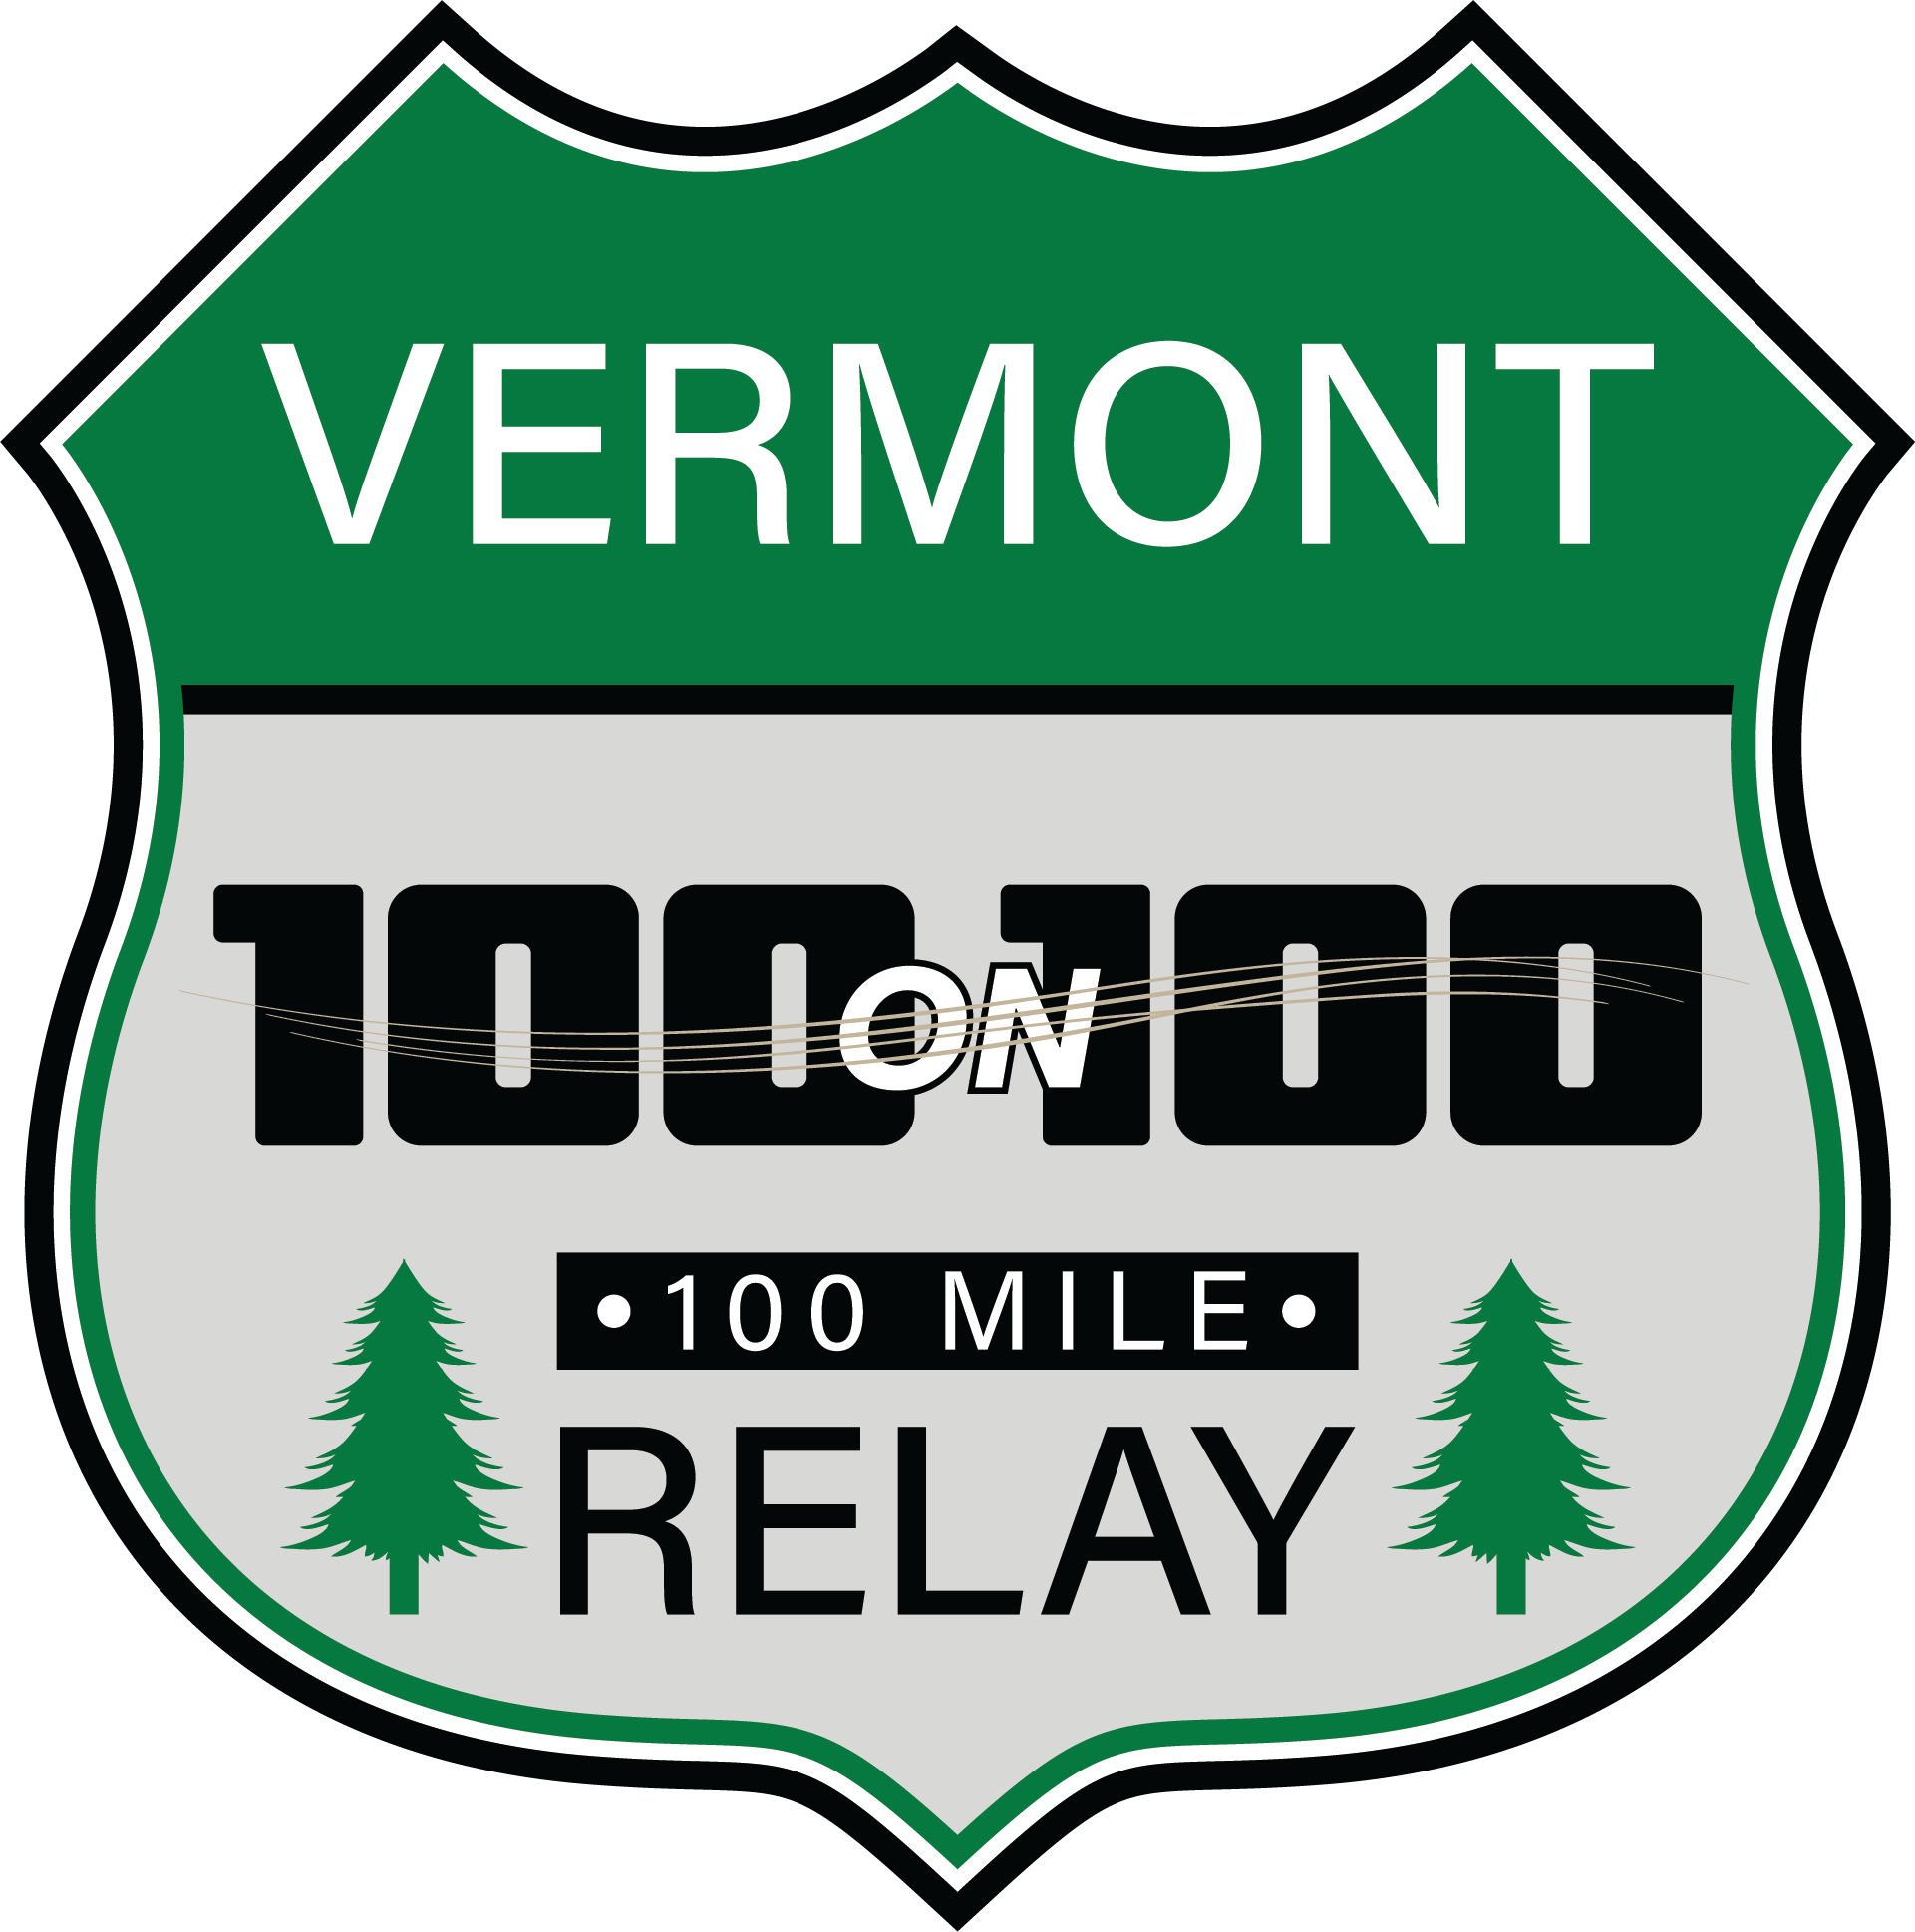 100 on 100 Relay logo on RaceRaves